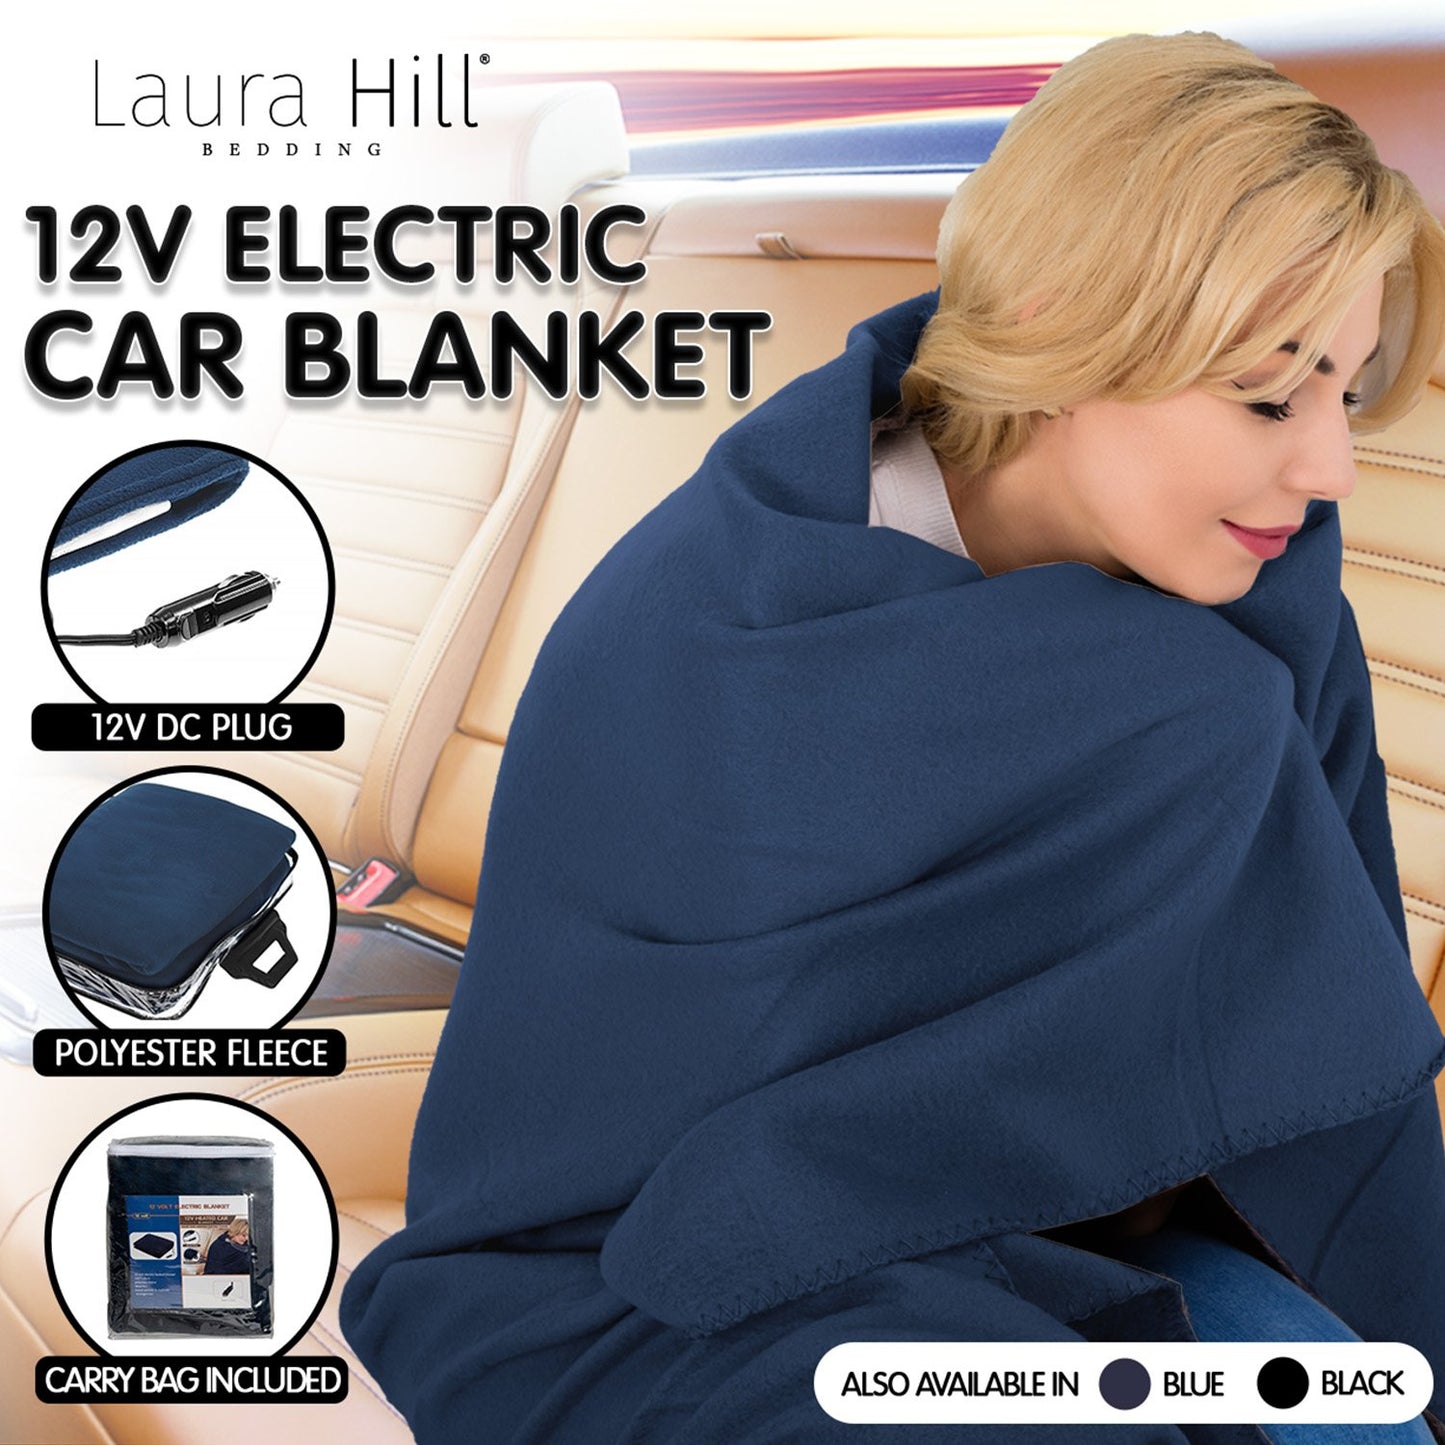 Heated Electric Car Blanket 150x110cm 12V - Navy Blue